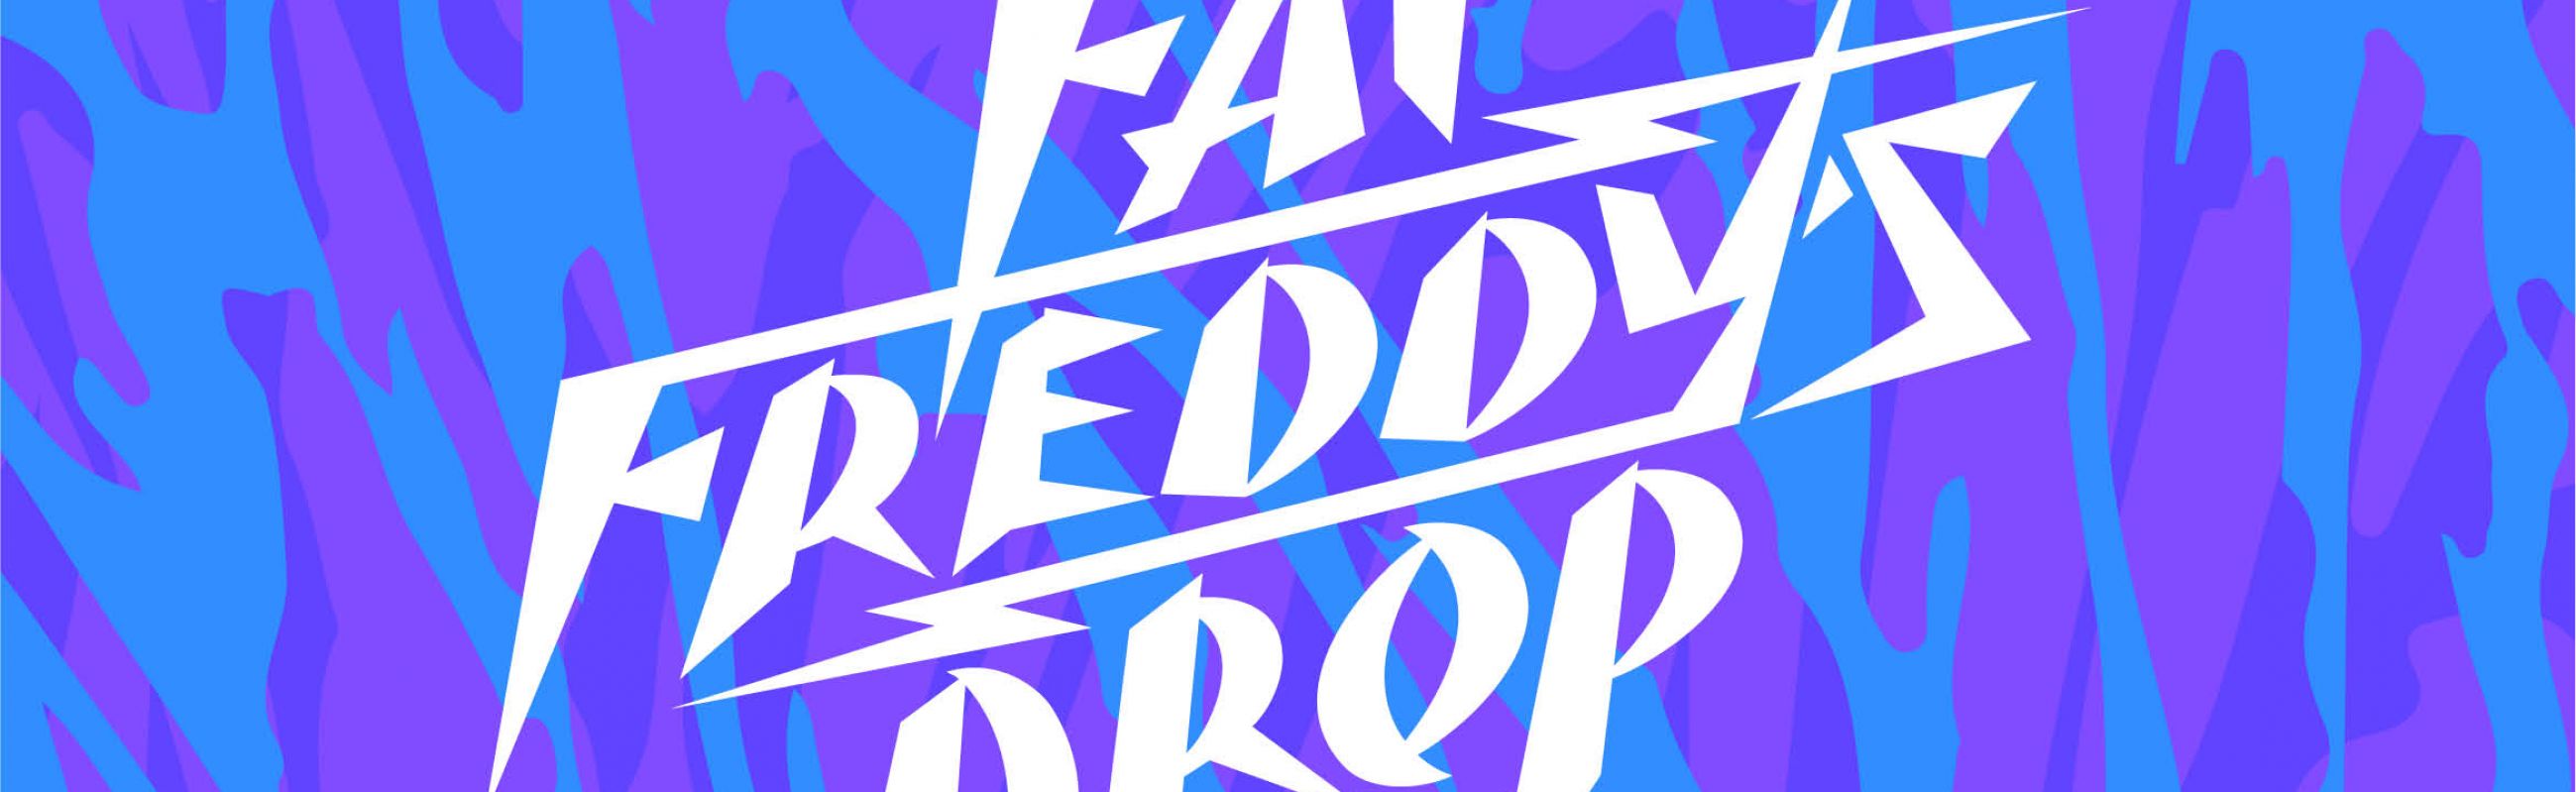 FAT FREDDY'S DROP POSTER